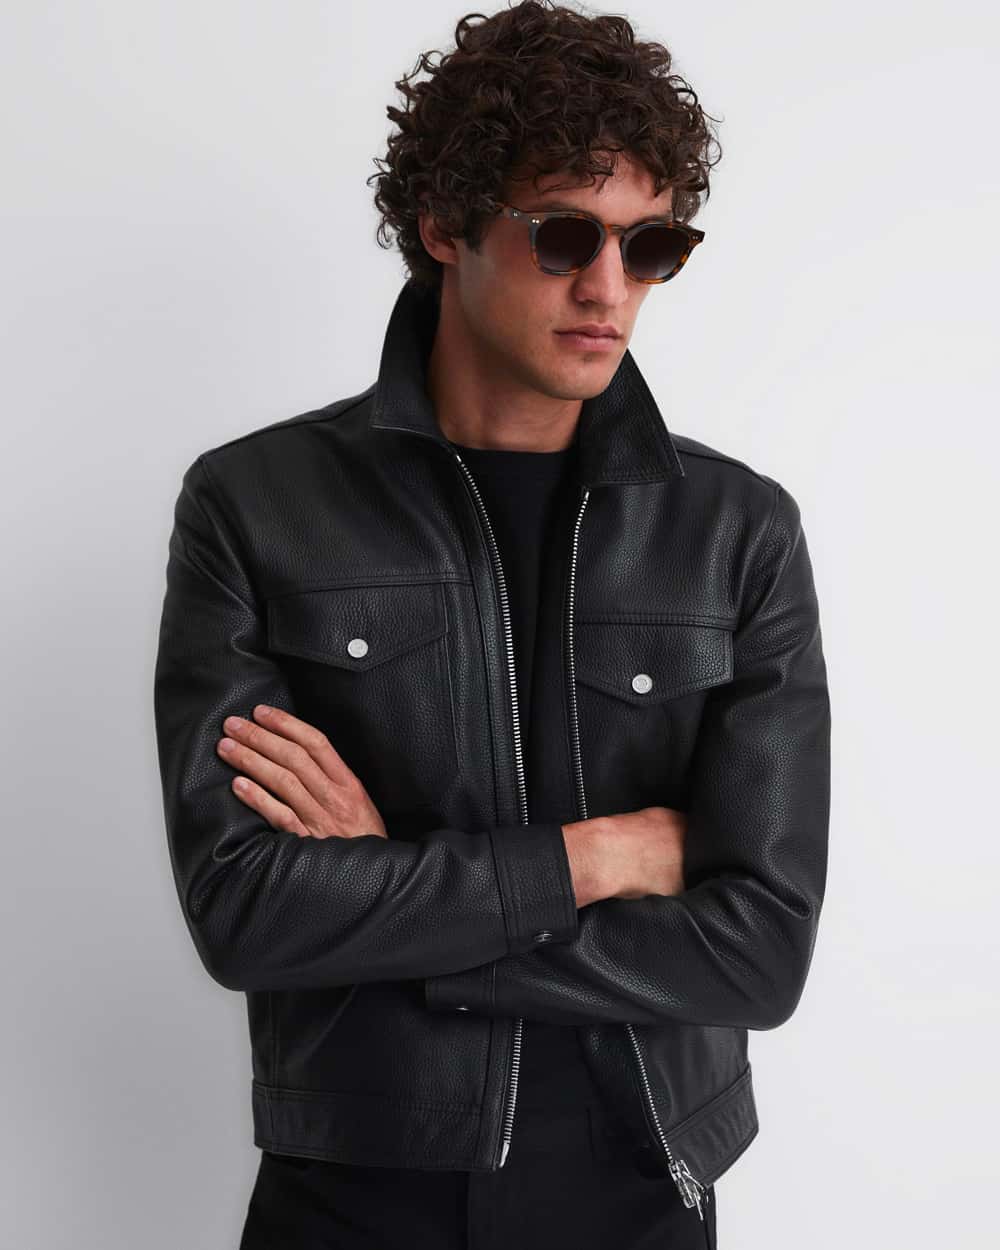 Man wearing Reiss black leather collared jacket with black sweatshirt, black pants and black sunglasses